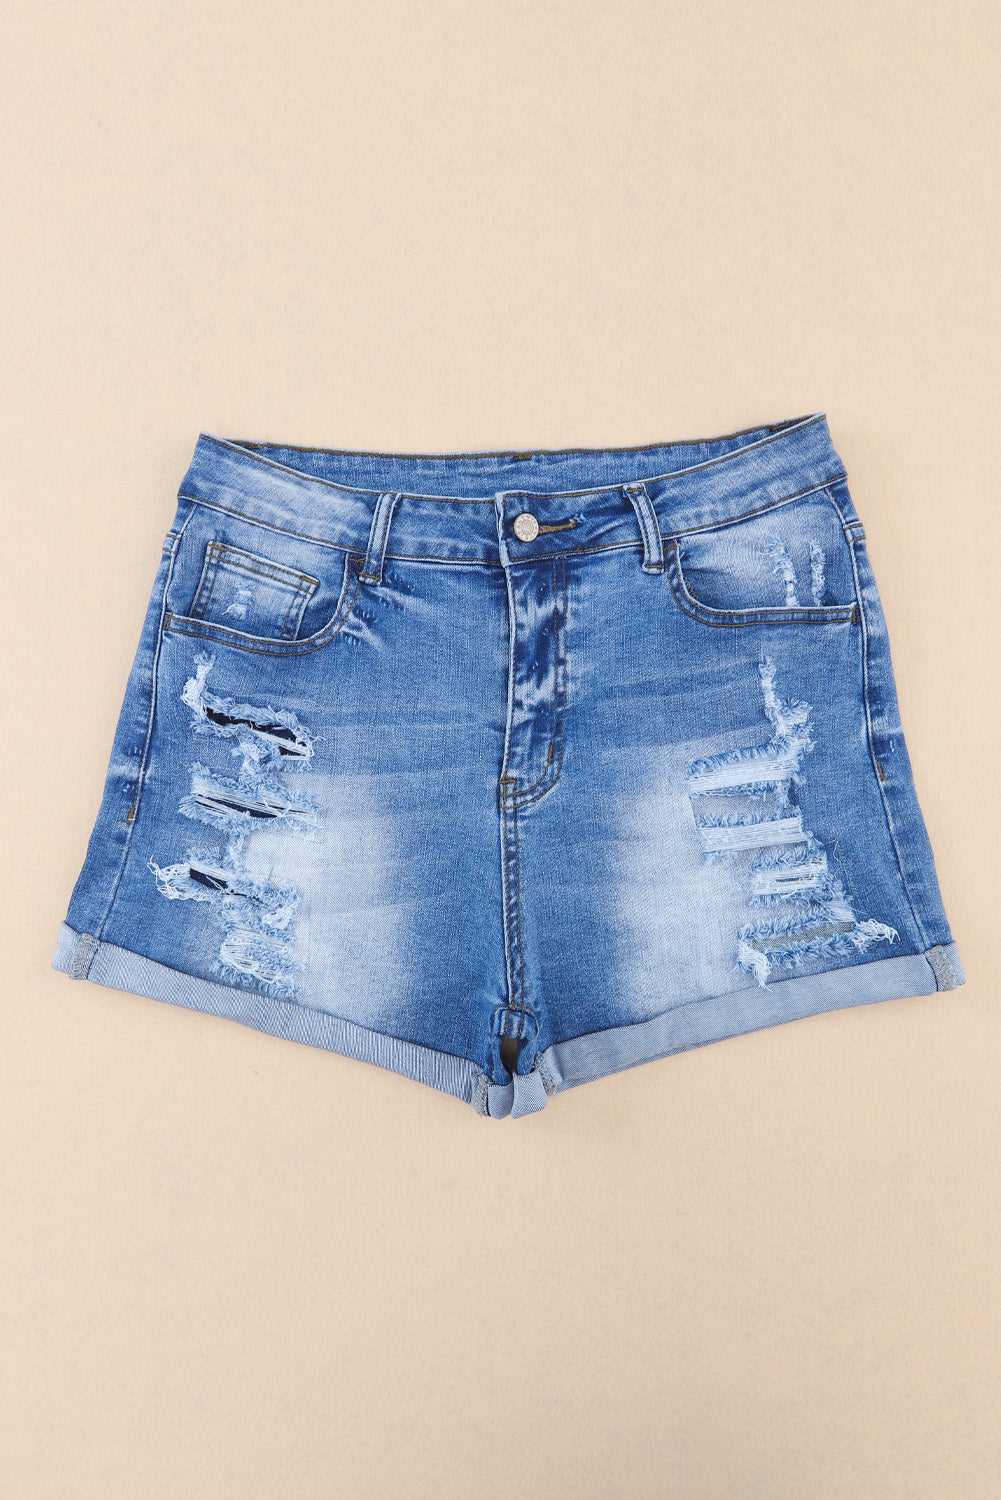 Vintage Distressed High Waist Pocket Denim Shorts